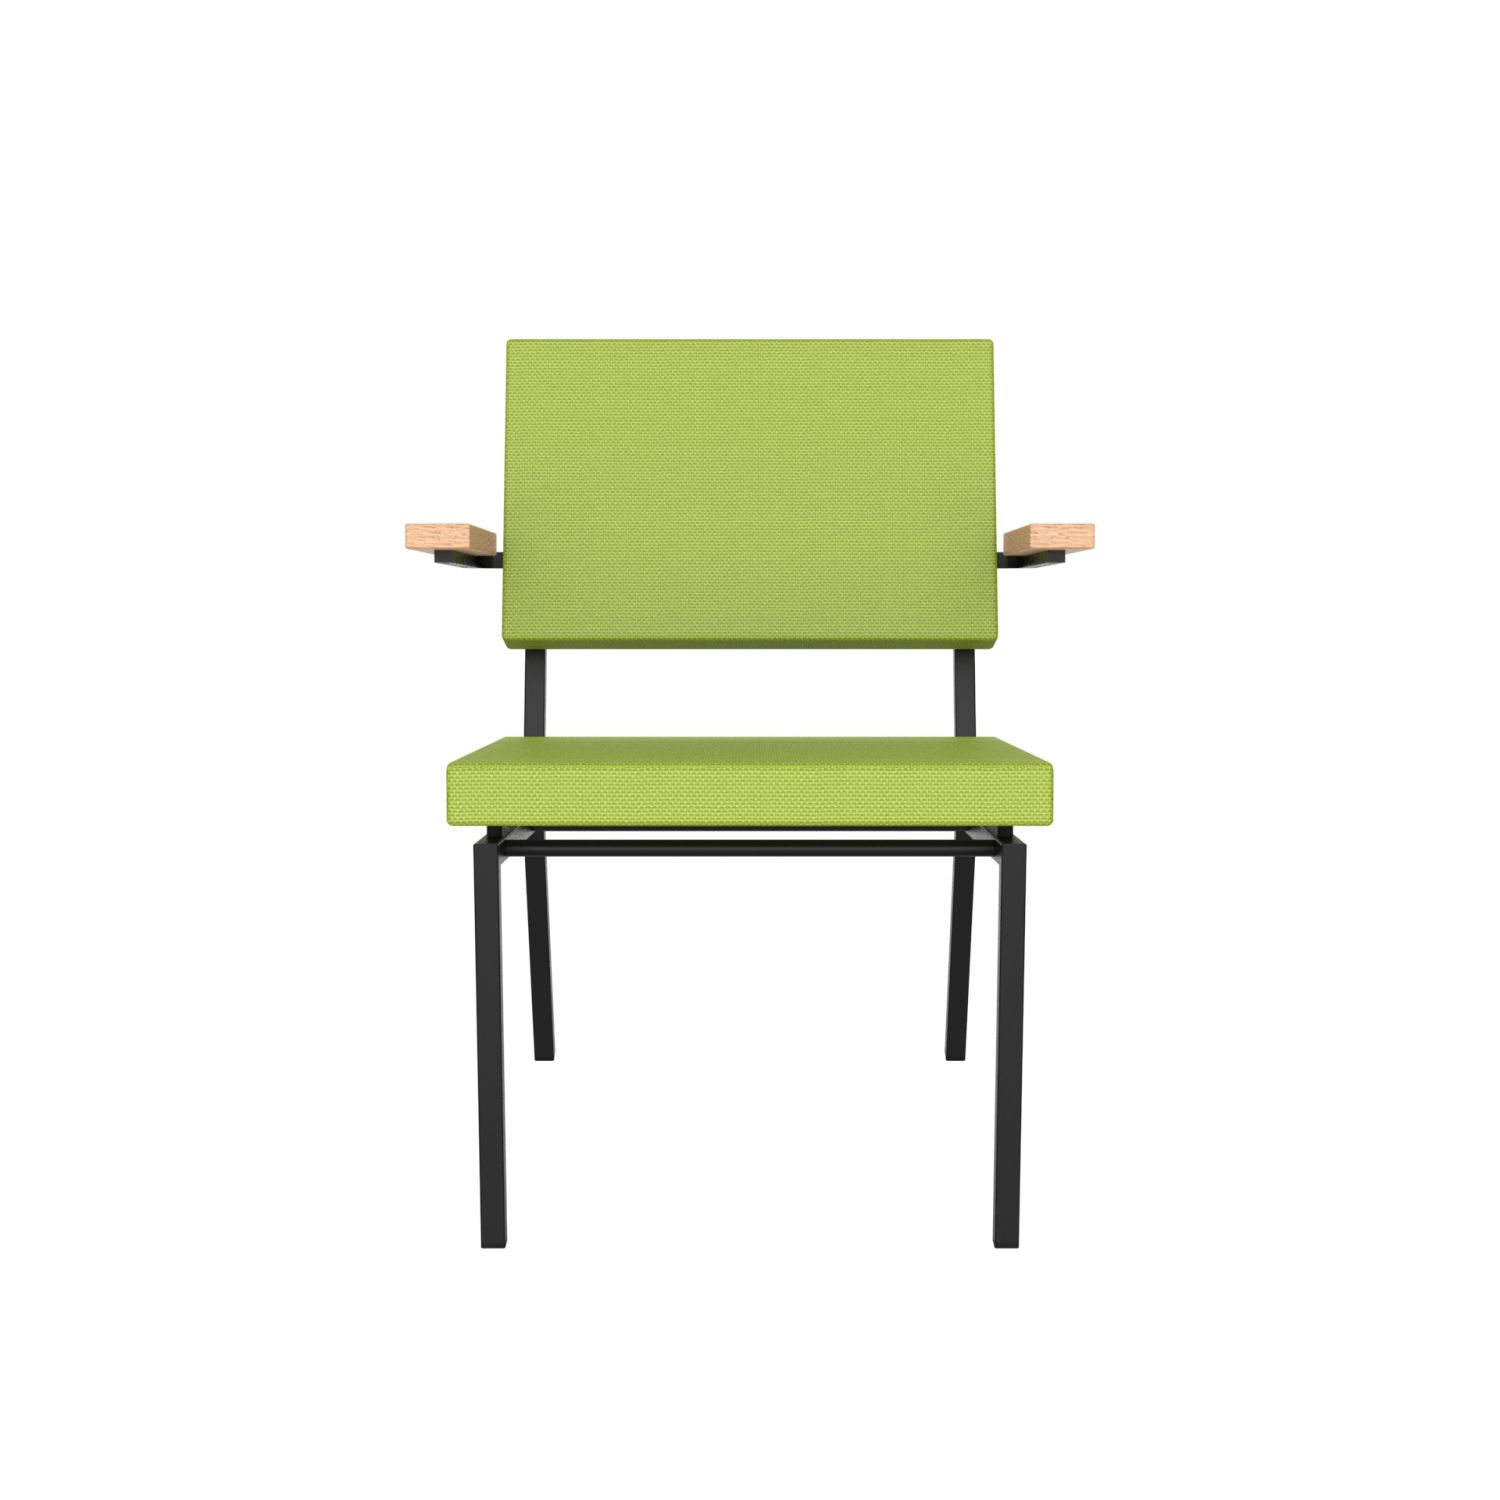 lensvelt gerrit veenendaal low chair with armrests fairway 020 price level 1 black frame ral9005 hard leg ends